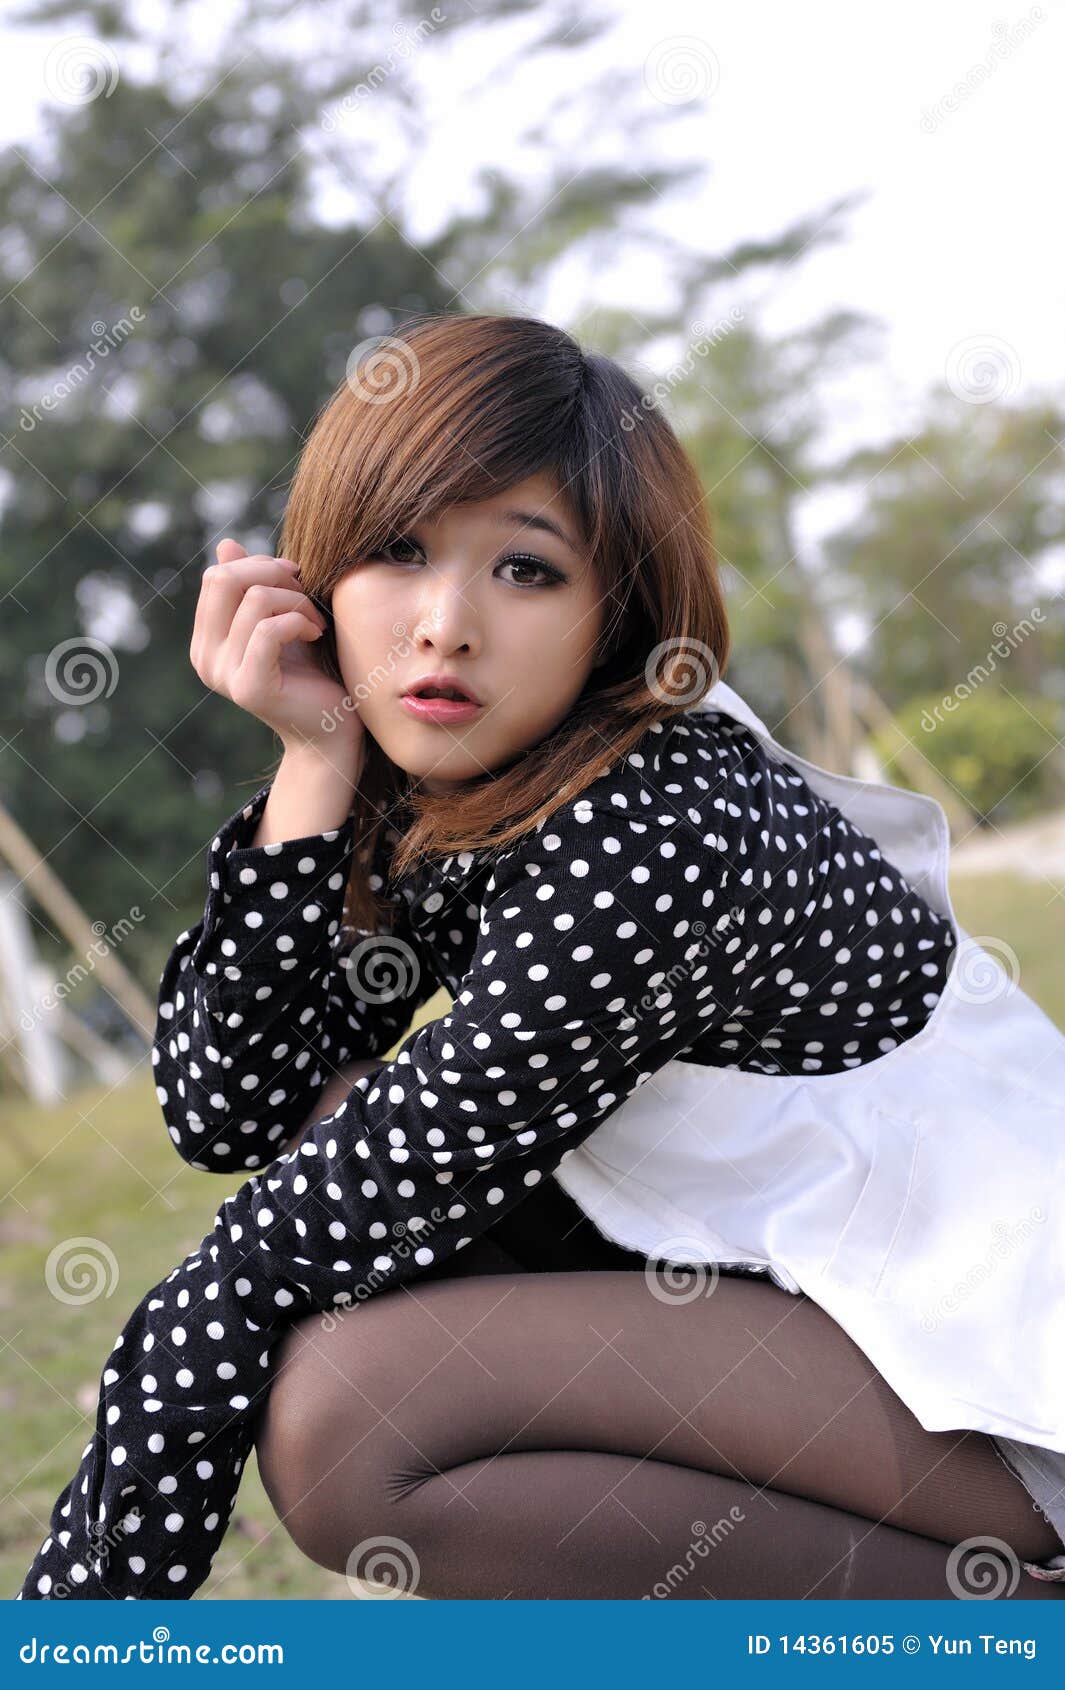 https://thumbs.dreamstime.com/z/pure-beautiful-asian-girl-14361605.jpg